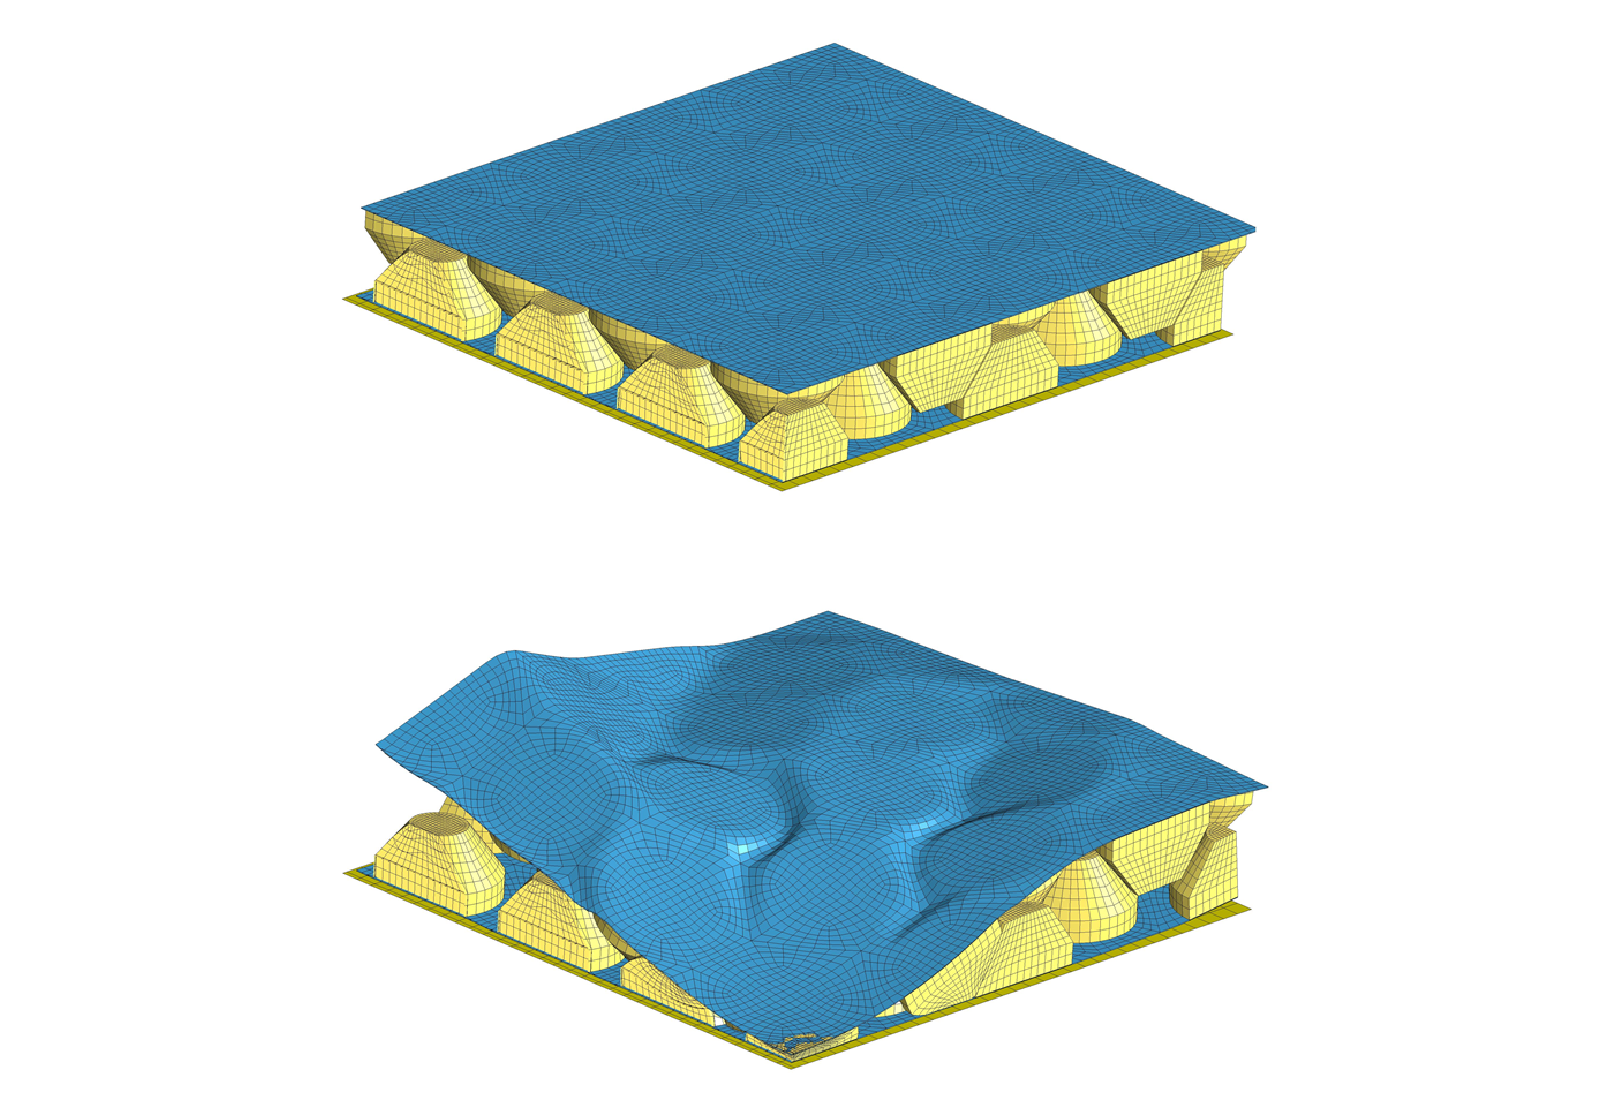 LS-DYNA Impact of nested foam blocks.